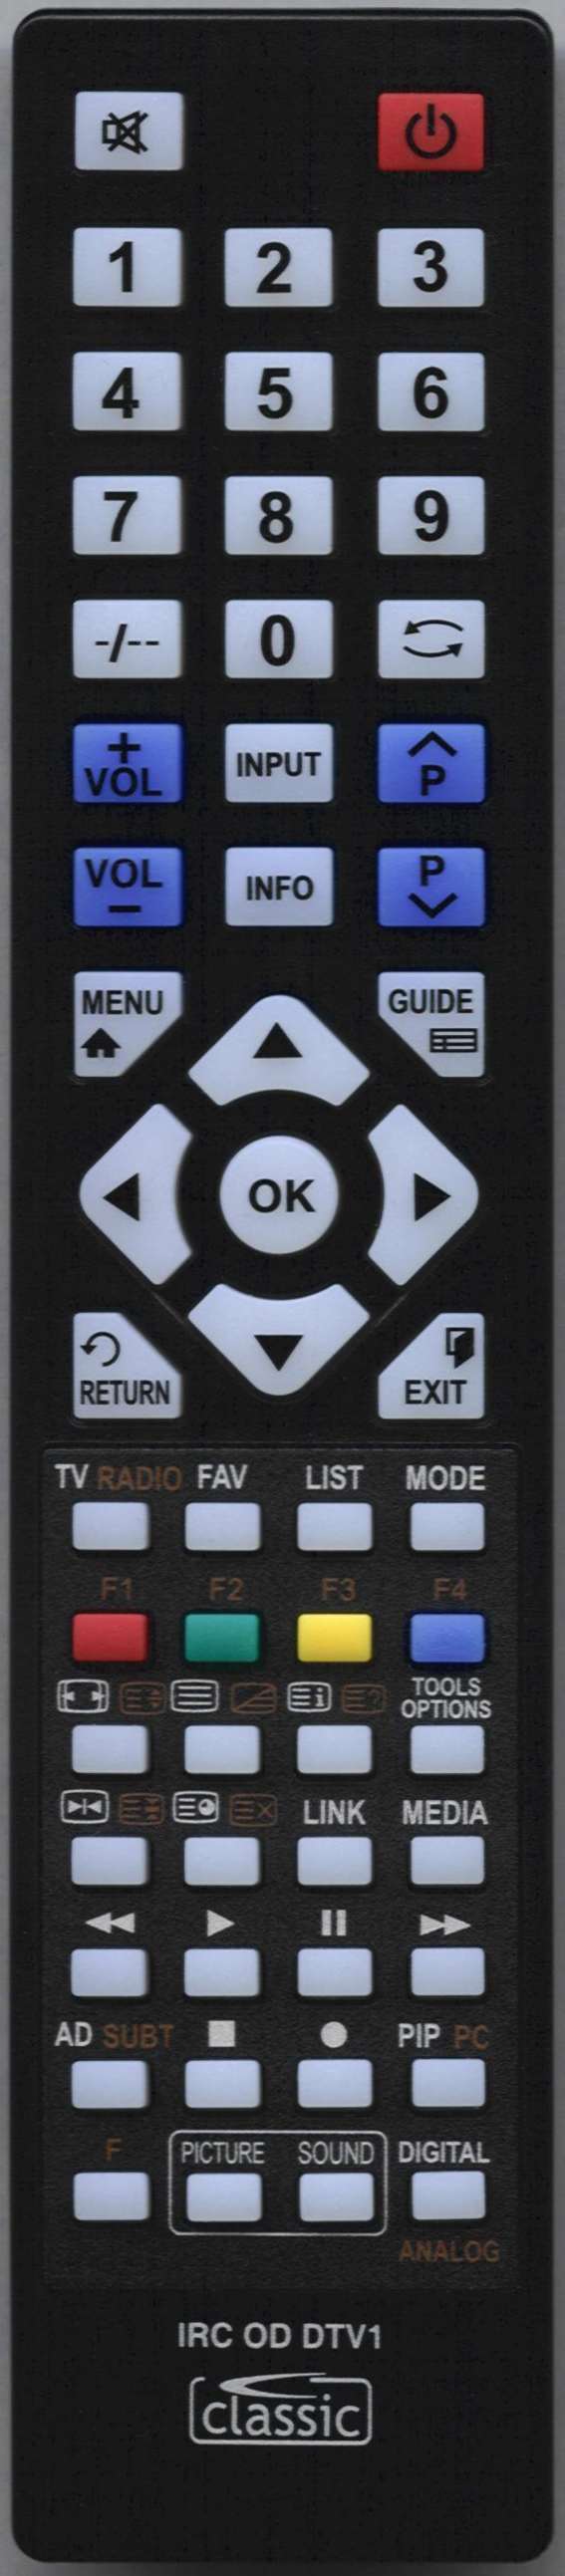 JVC RM-C 794 Remote Control